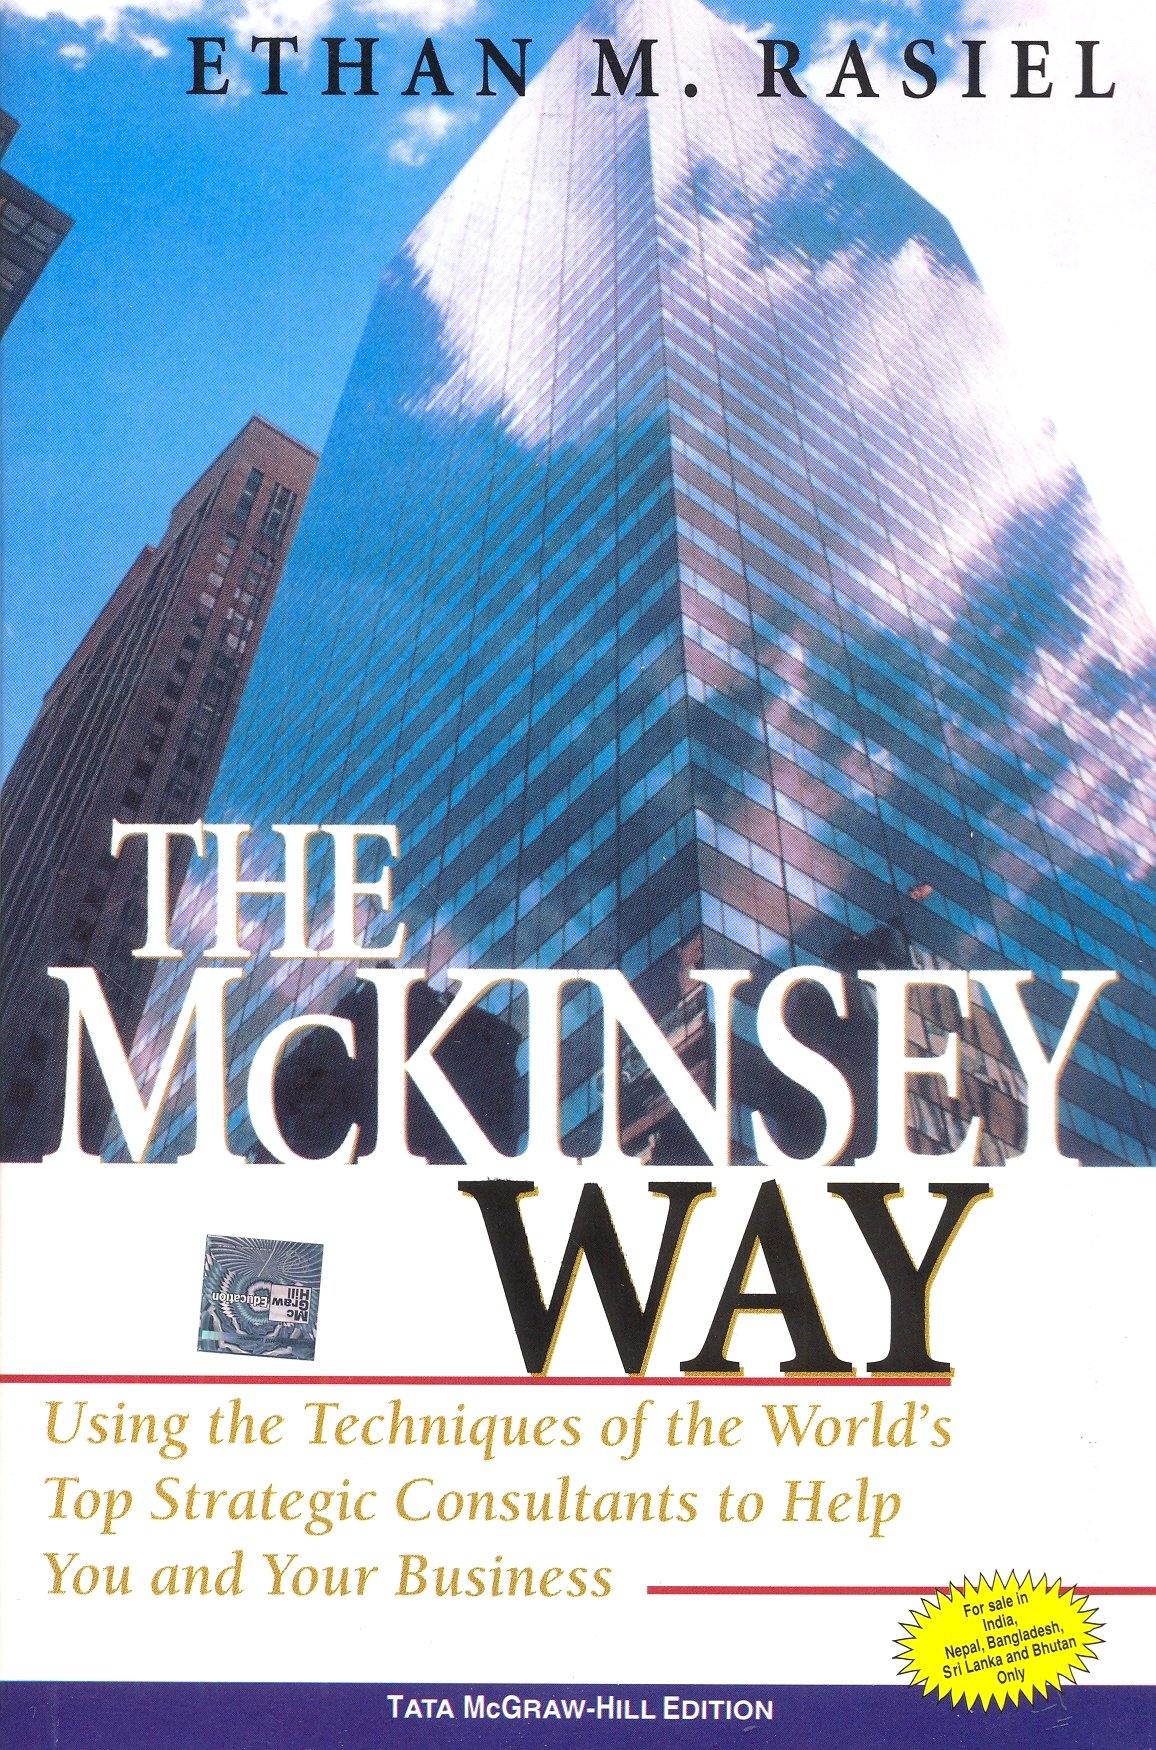 The McKinsey Way by Ethan M. Rasiel